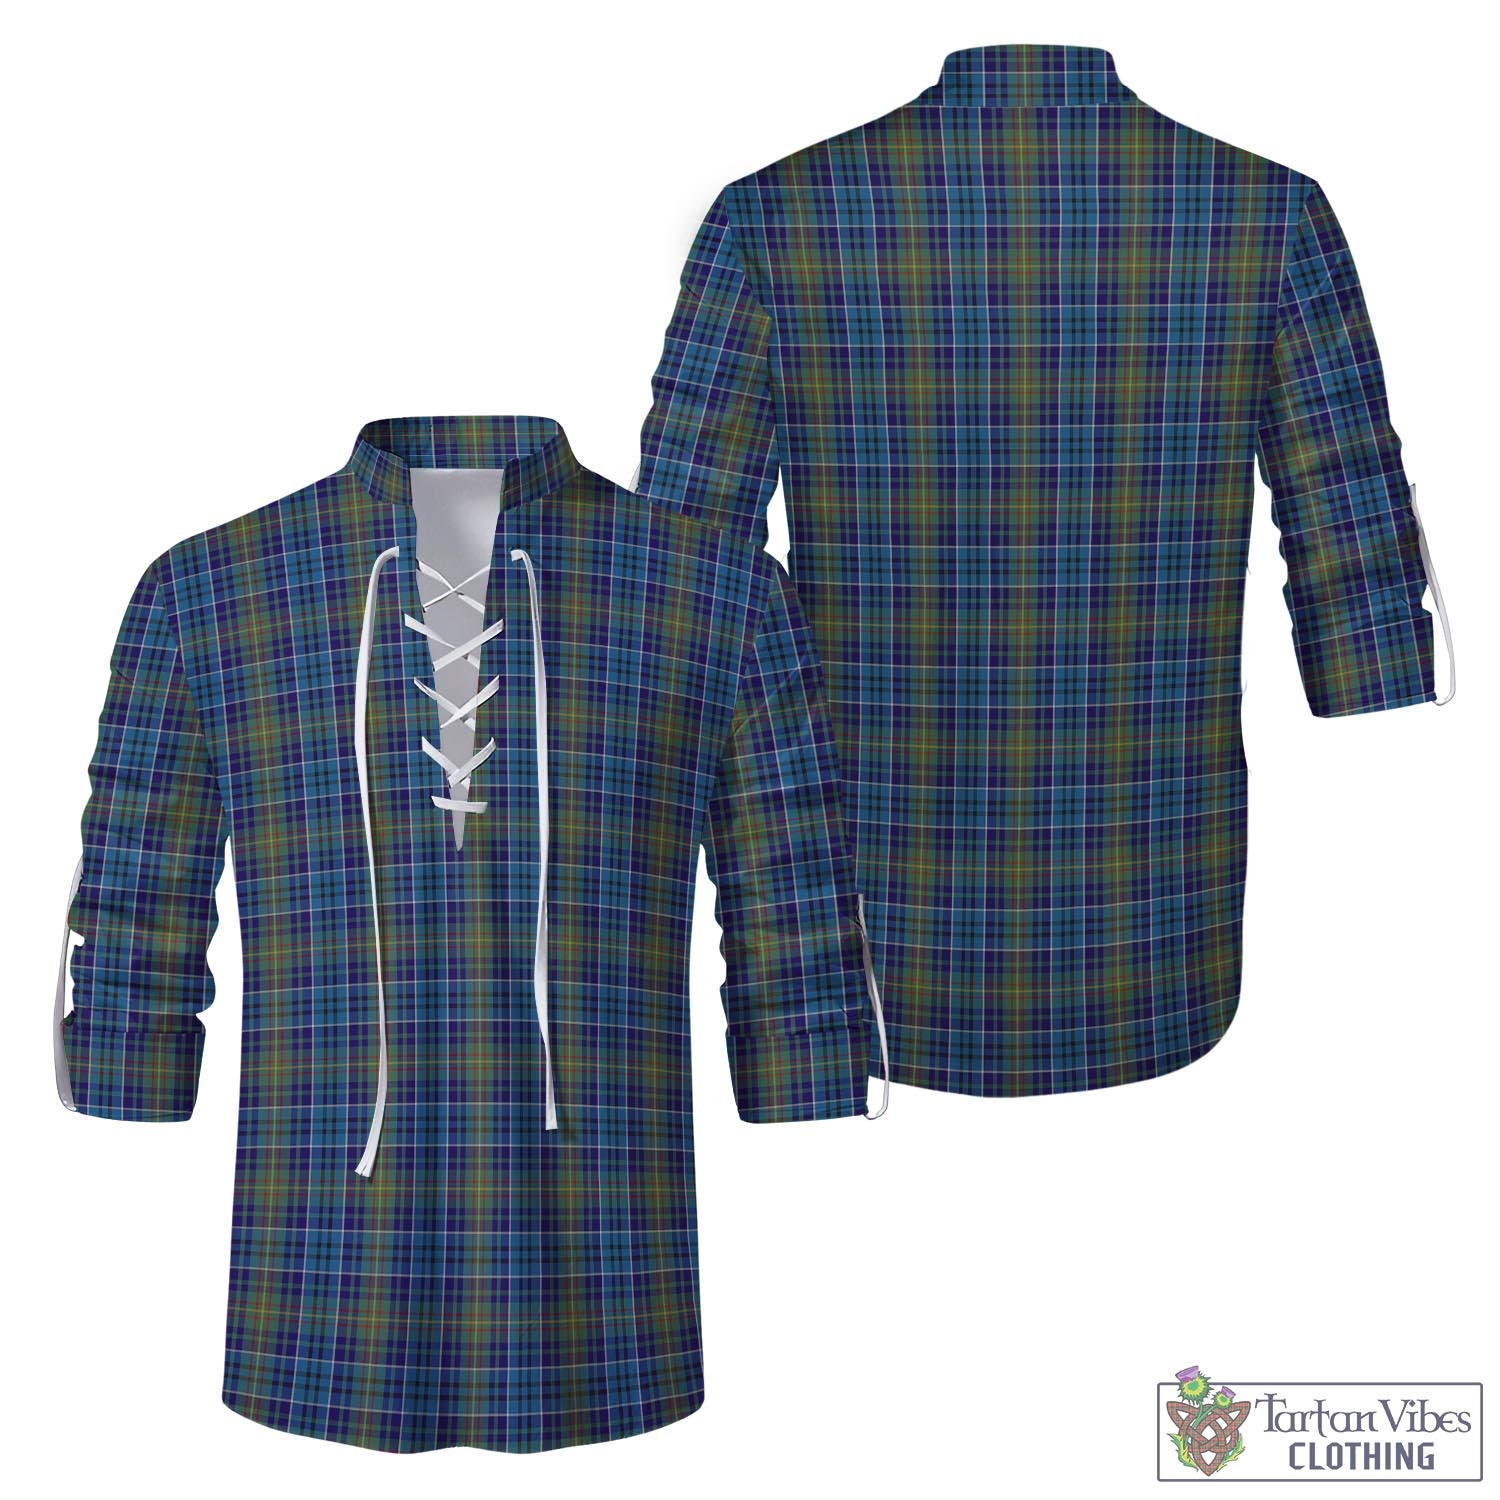 Tartan Vibes Clothing O'Sullivan Tartan Men's Scottish Traditional Jacobite Ghillie Kilt Shirt